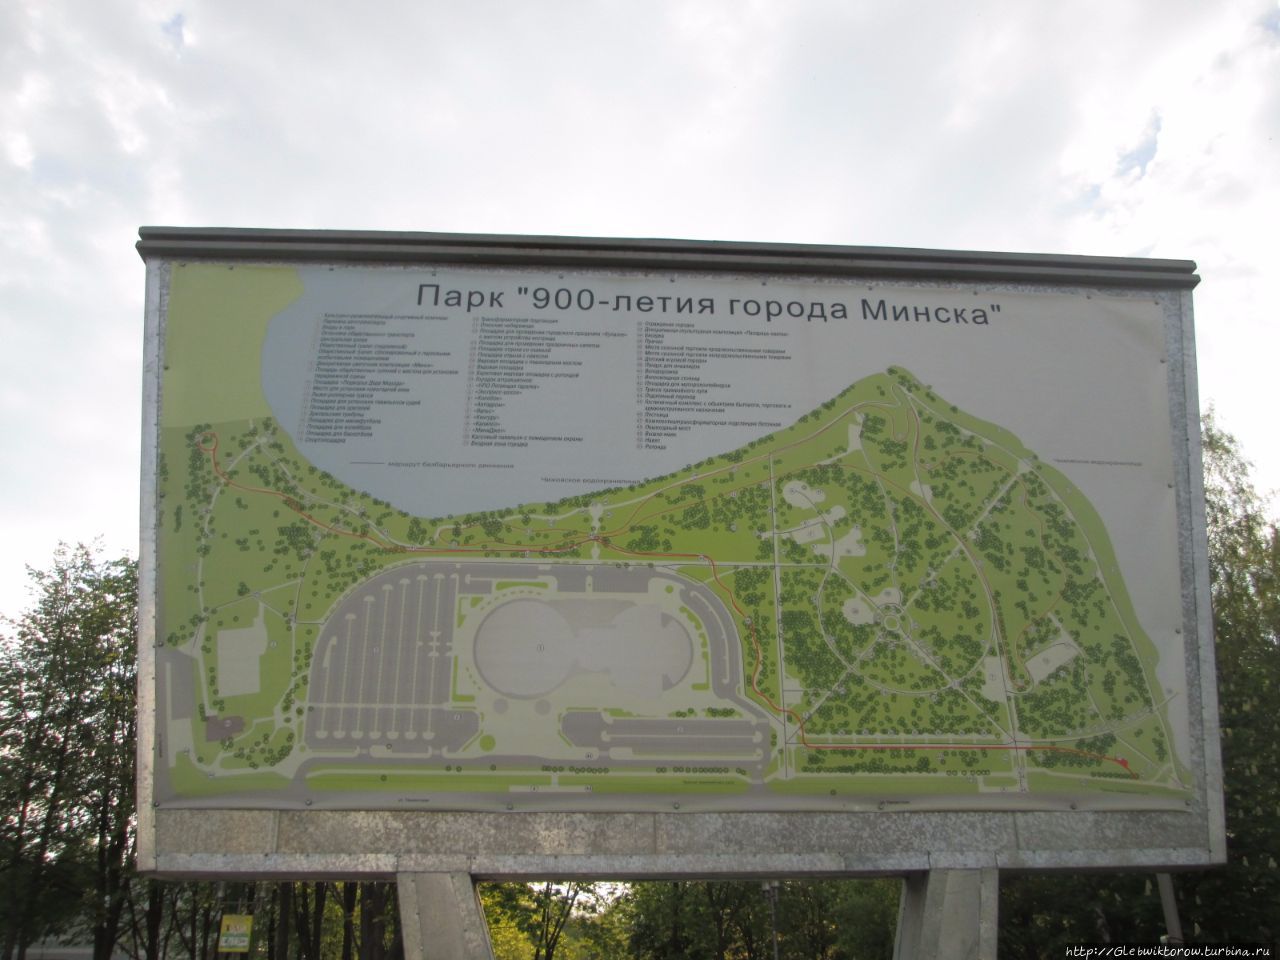 Парк 900-летия Минска / Park of the 900th anniversary of Minsk